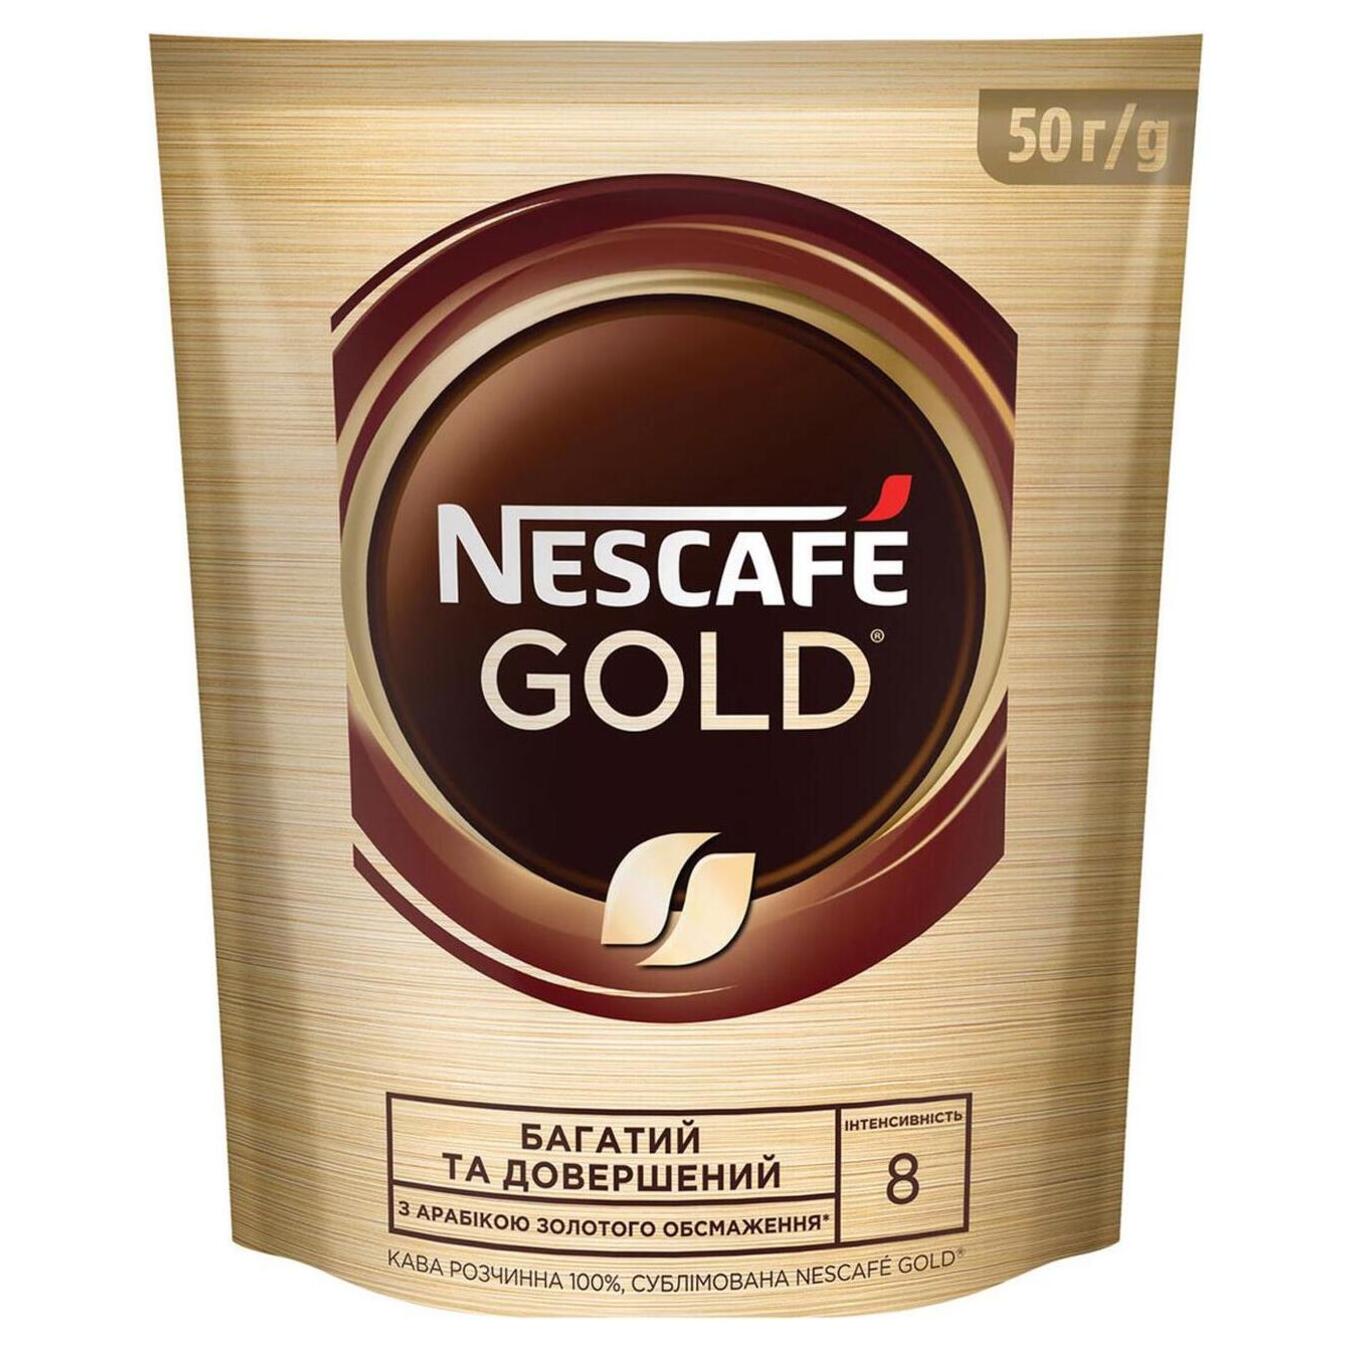 Кава Nescafe Gold розчинна натуральна м'яка упаковка 50г